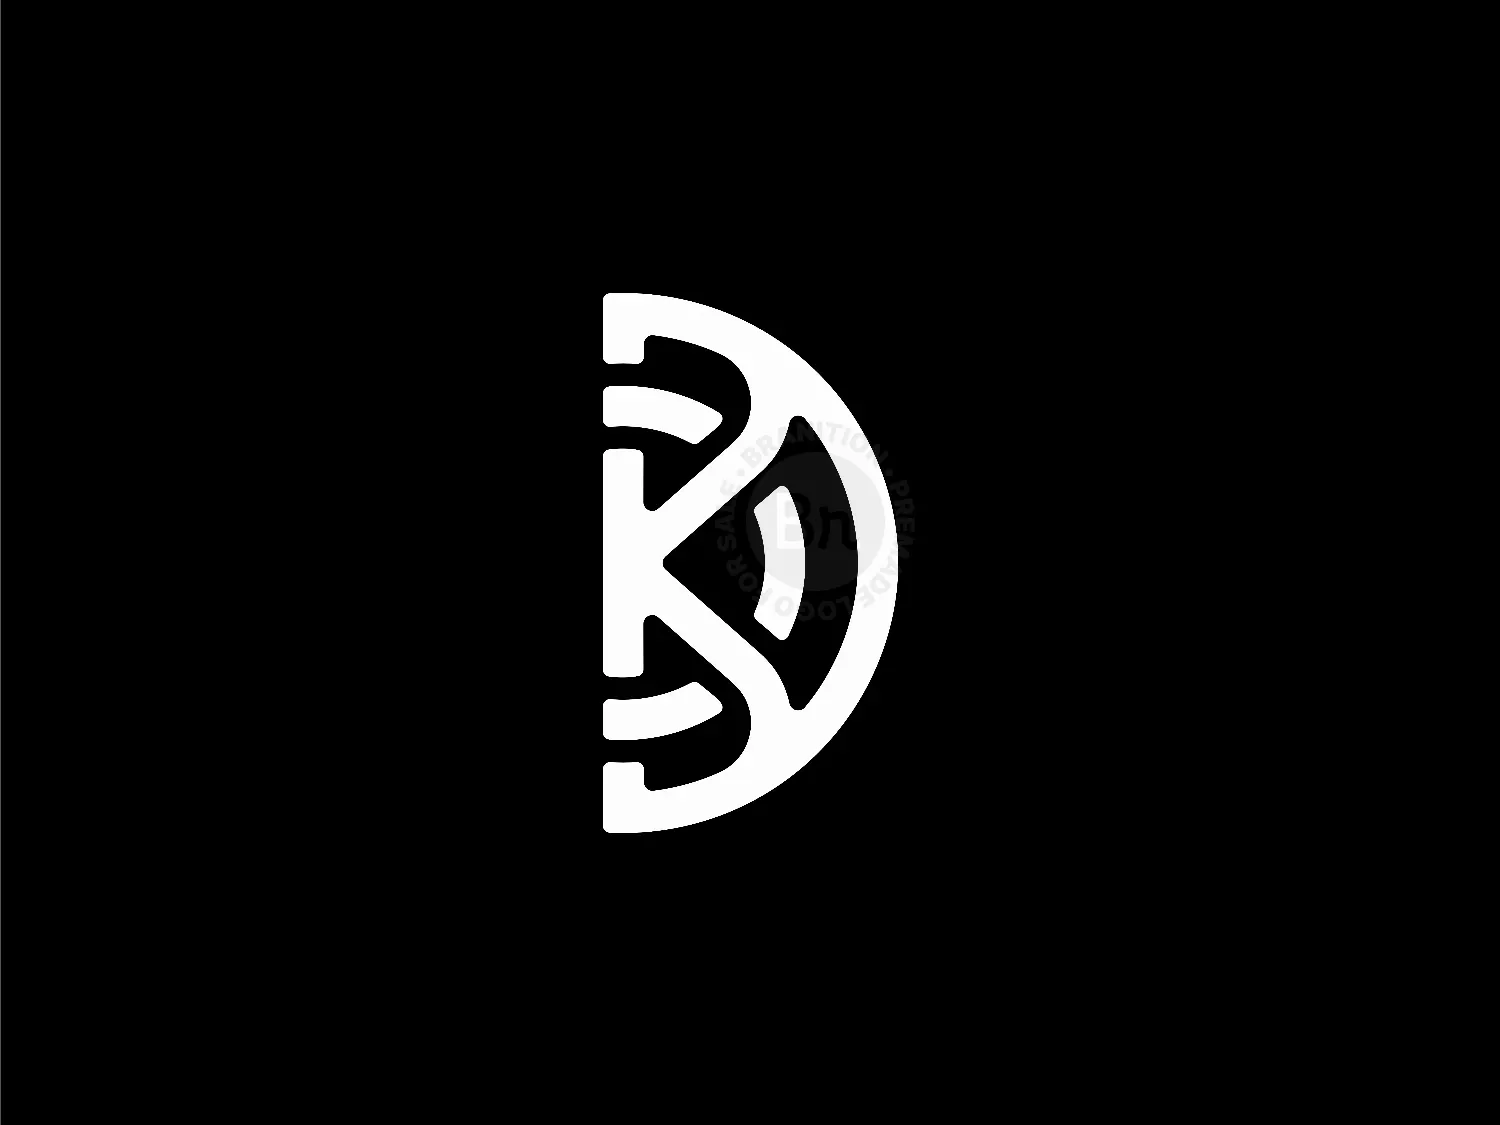 Kd Or Dk Letter Logo Design Vector Template Stock Illustration - Download  Image Now - Logo, Monogram, Abstract - iStock